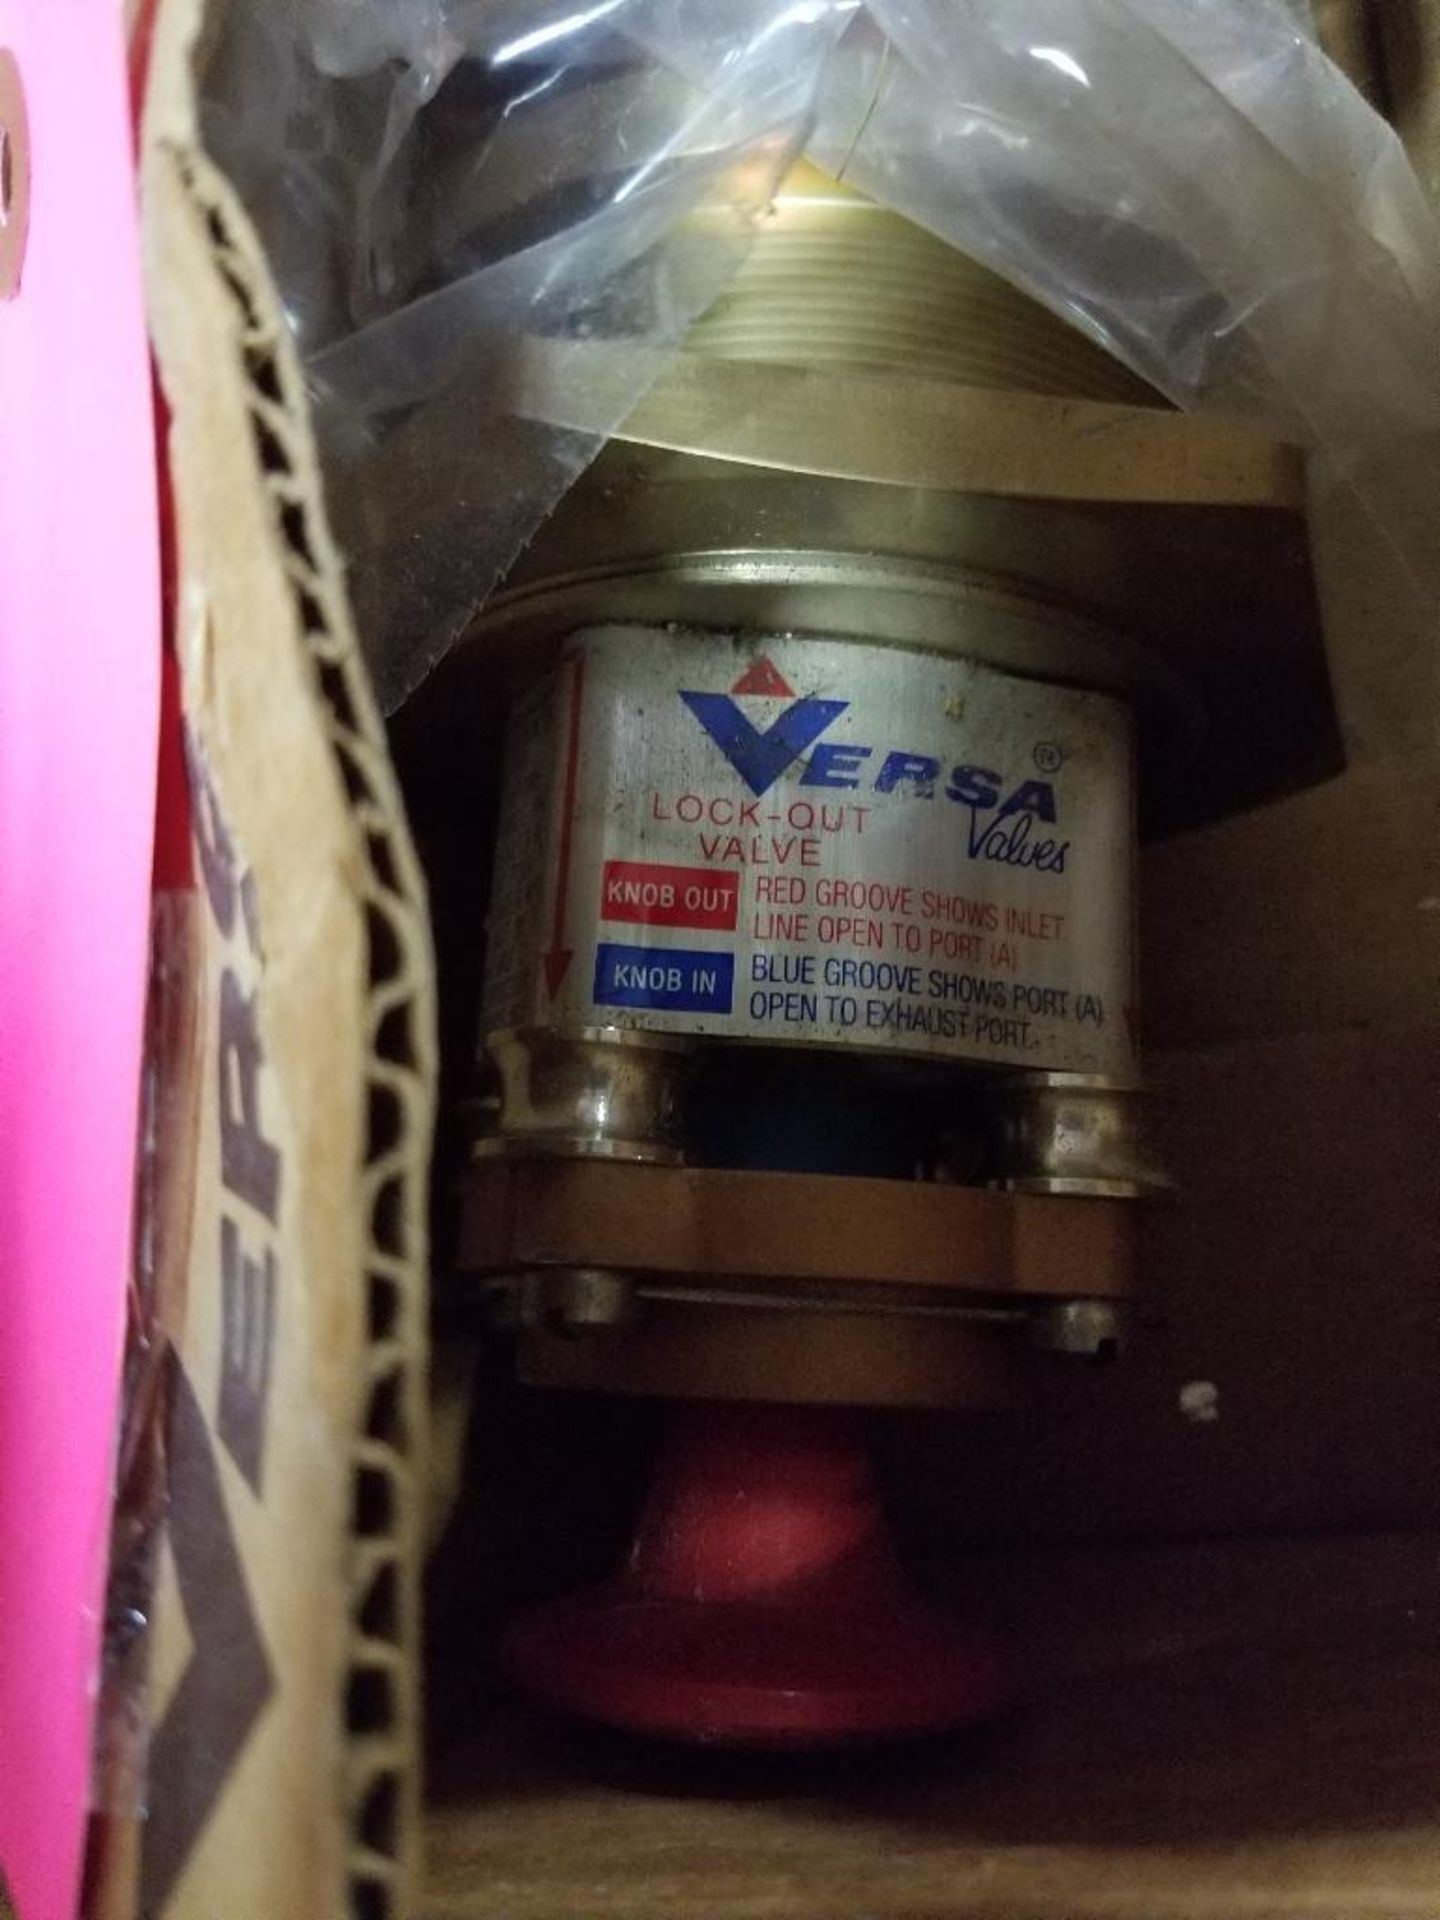 Versa Valves lock-out valve. VIZ-3701-L0VB-P.